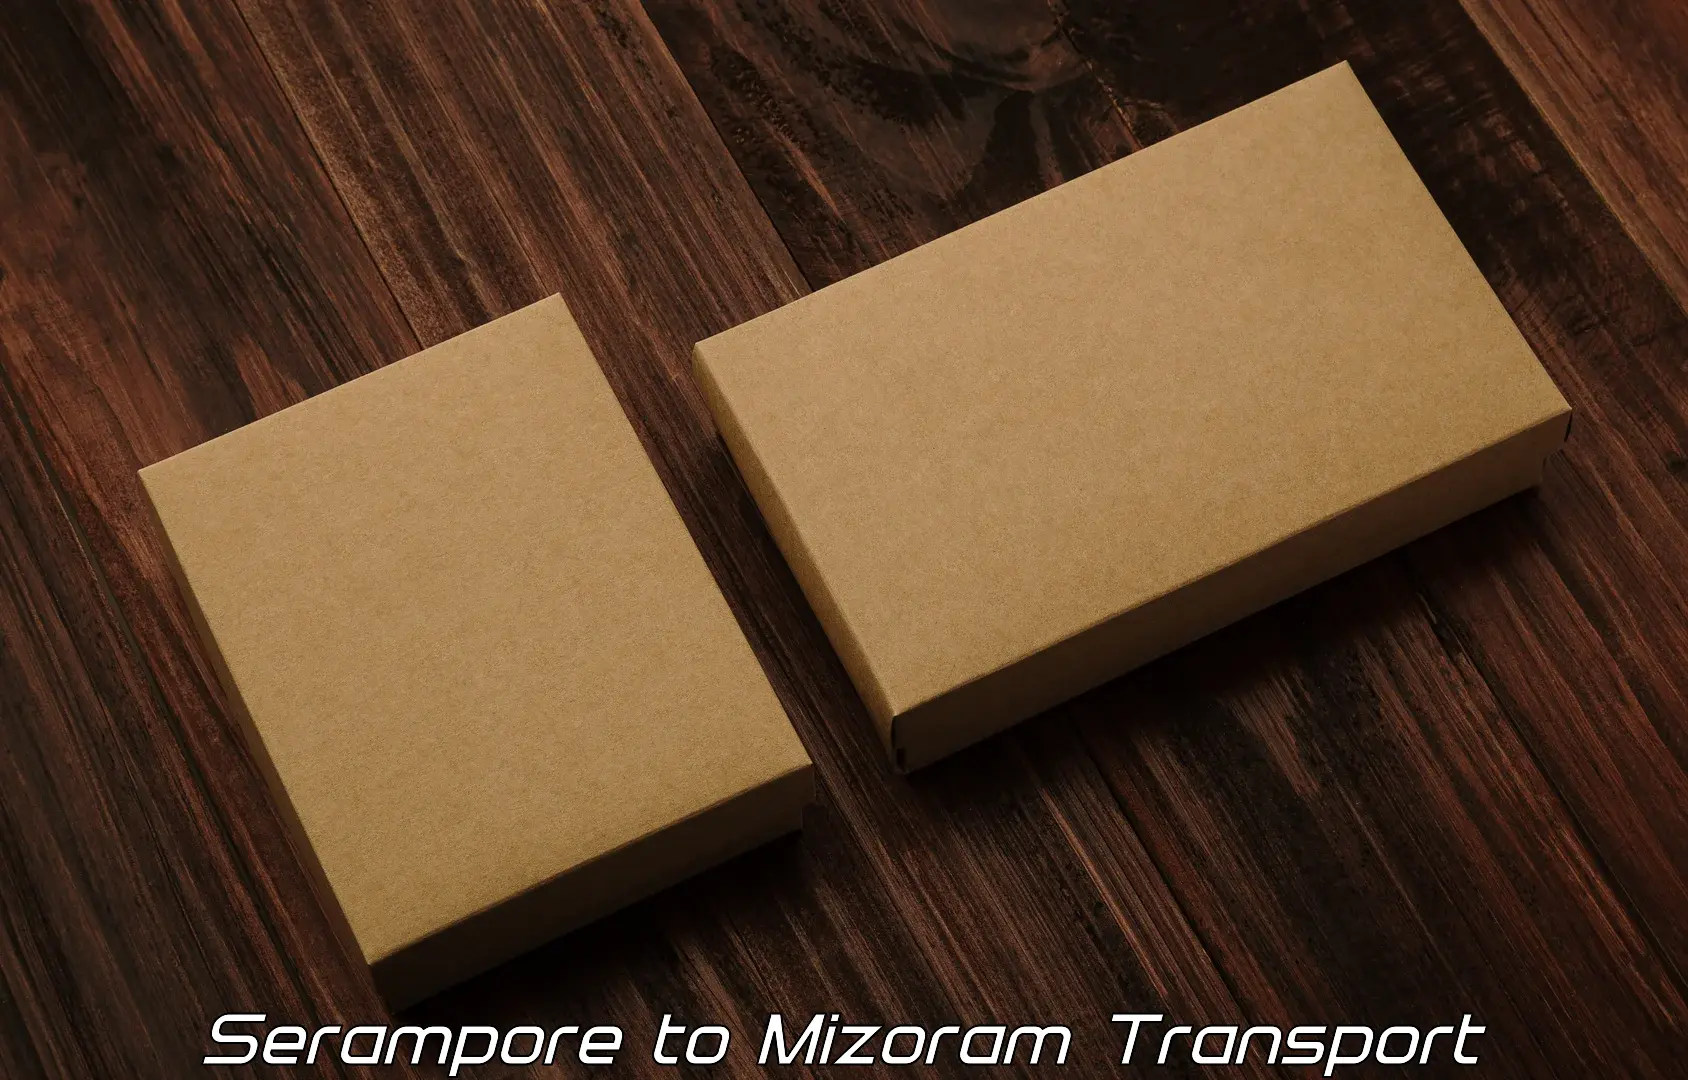 Two wheeler parcel service Serampore to Mizoram